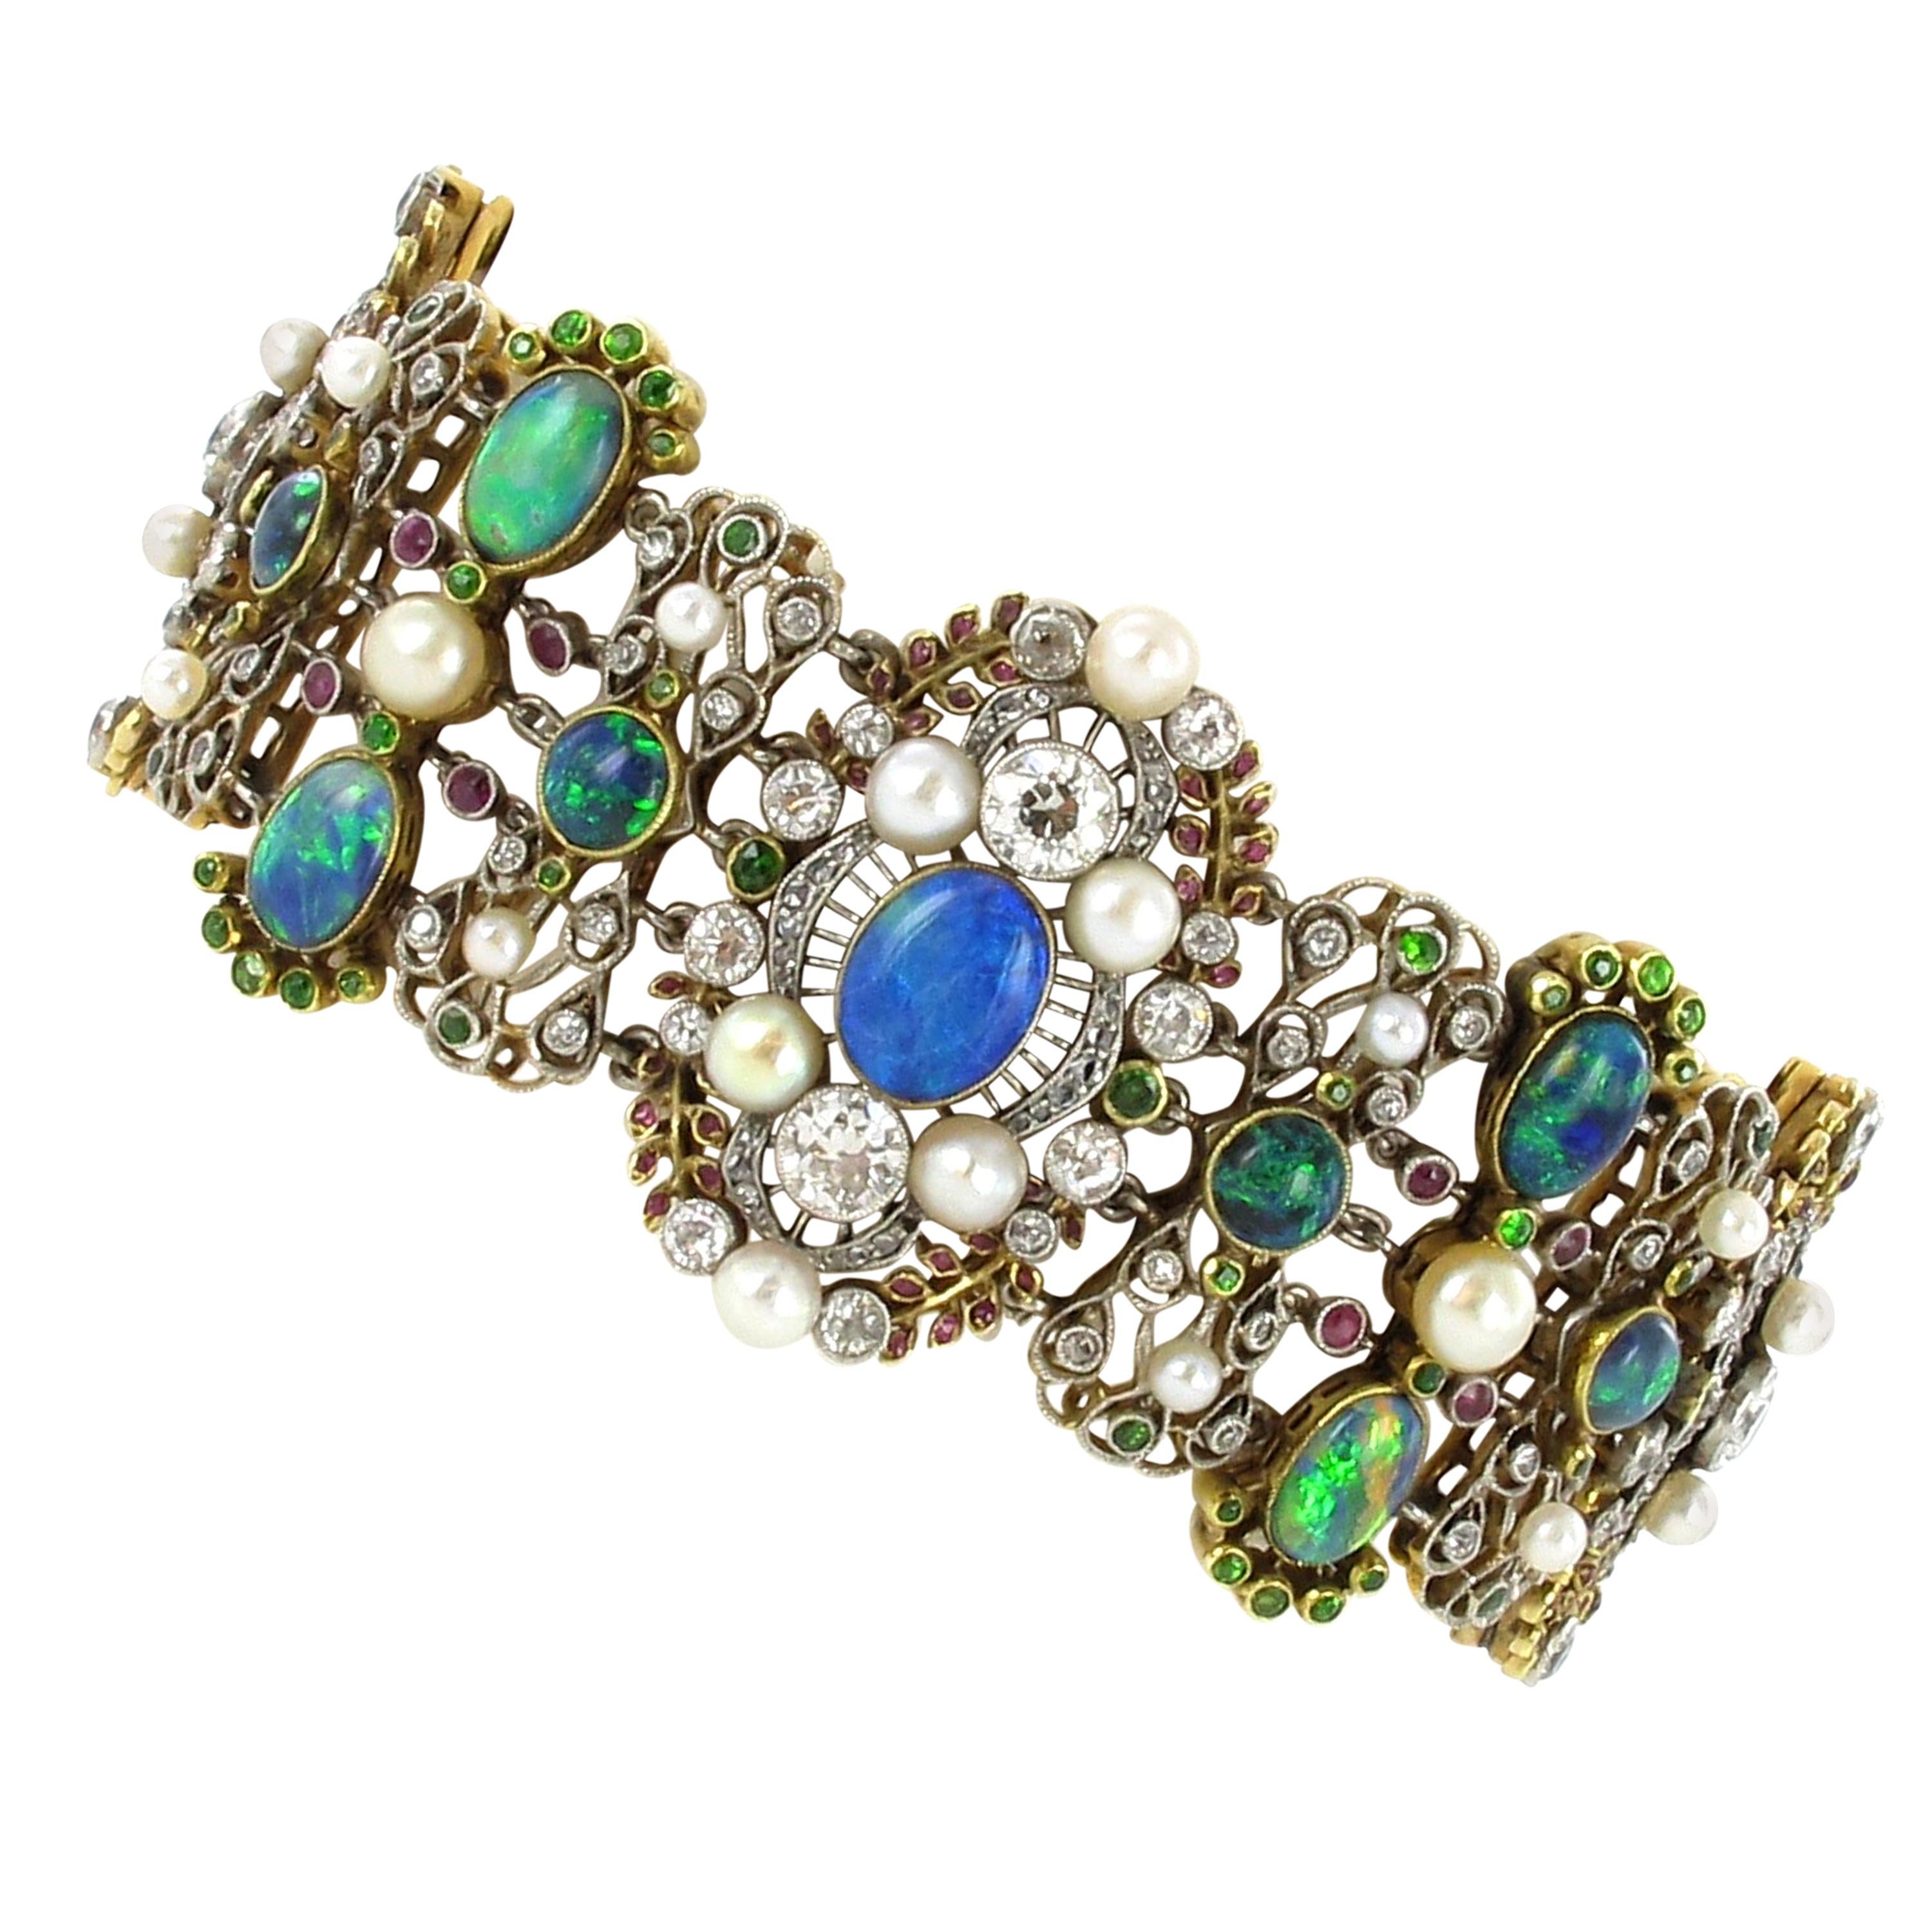 Belle Époque/Art Nouveau Bracelet with Opals, Pearls and Diamonds by Rothmuller For Sale